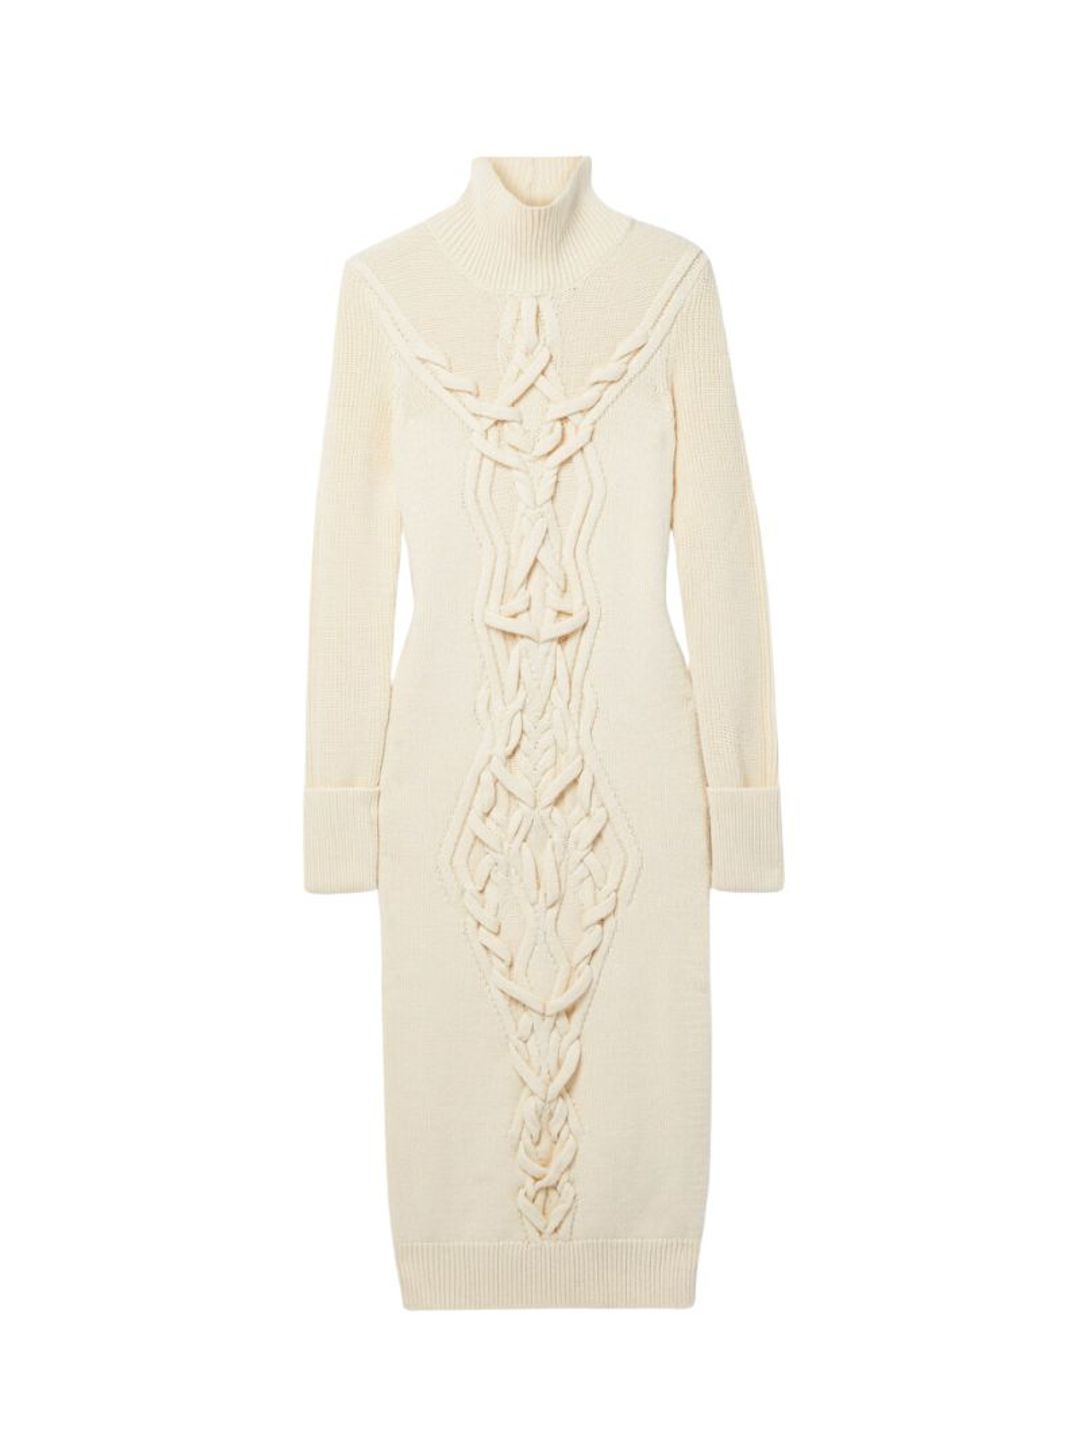 Isabel Marant cream cable knit dress